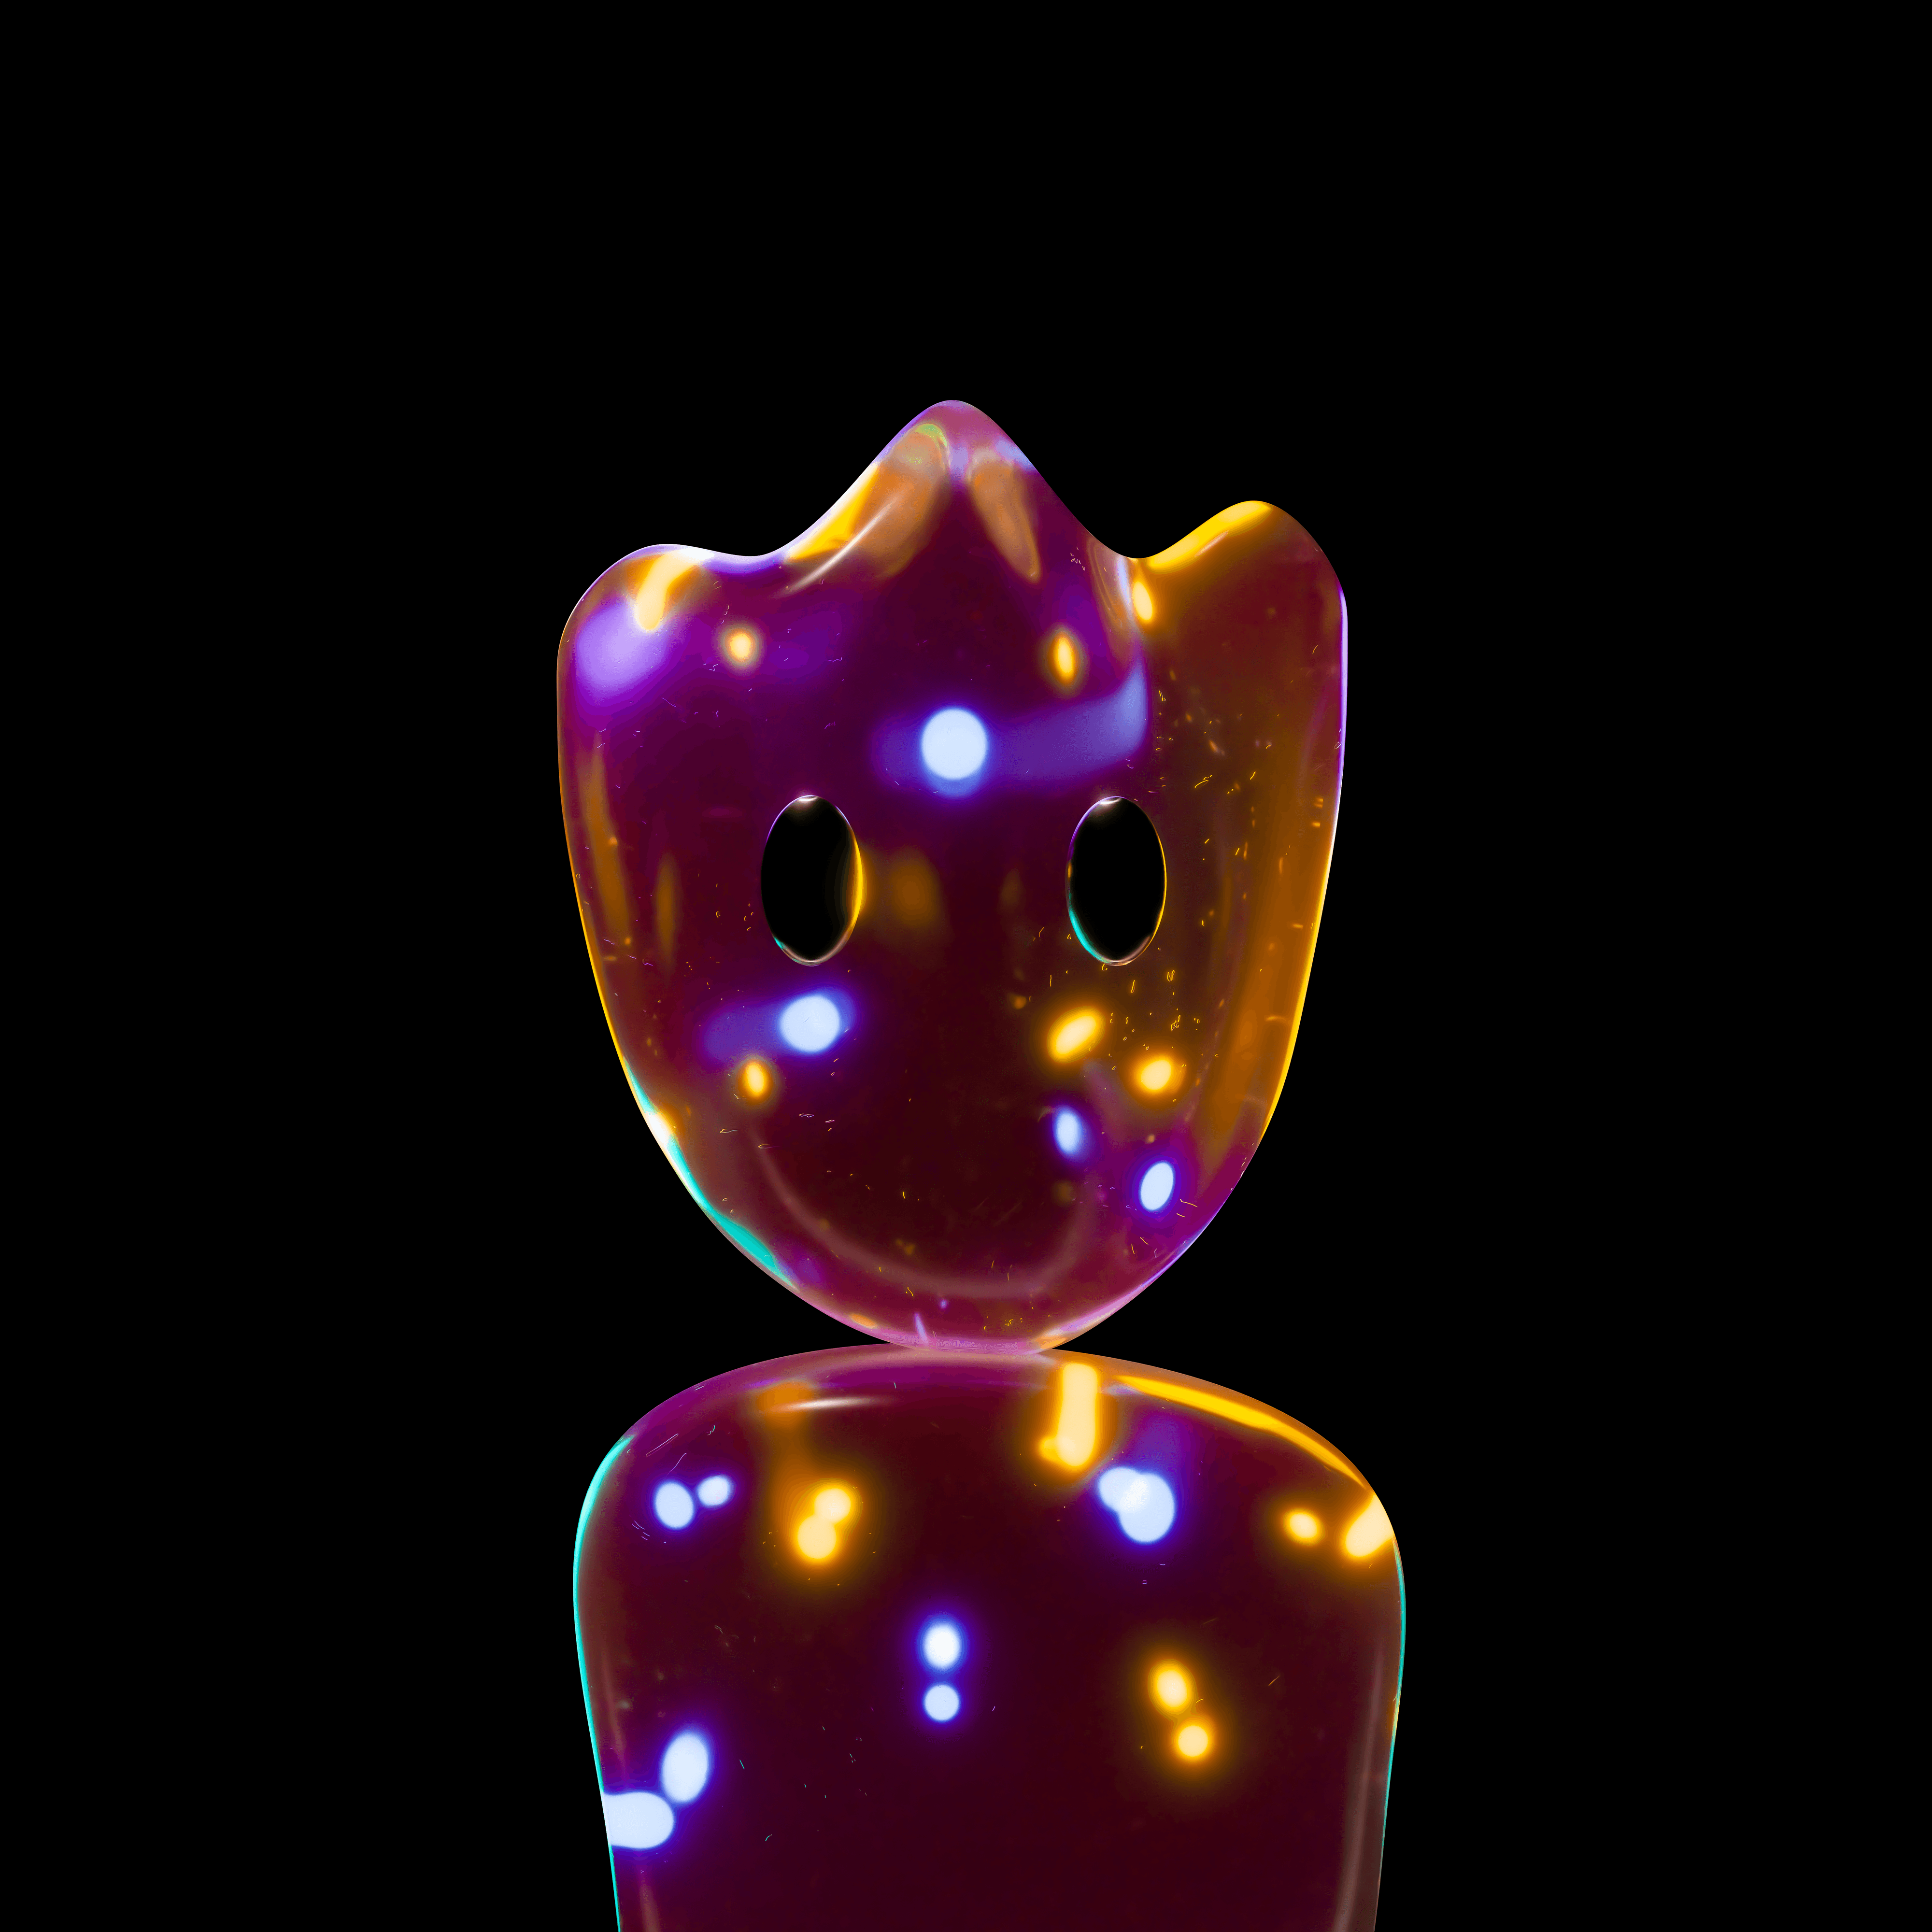 The Glowing Paspop